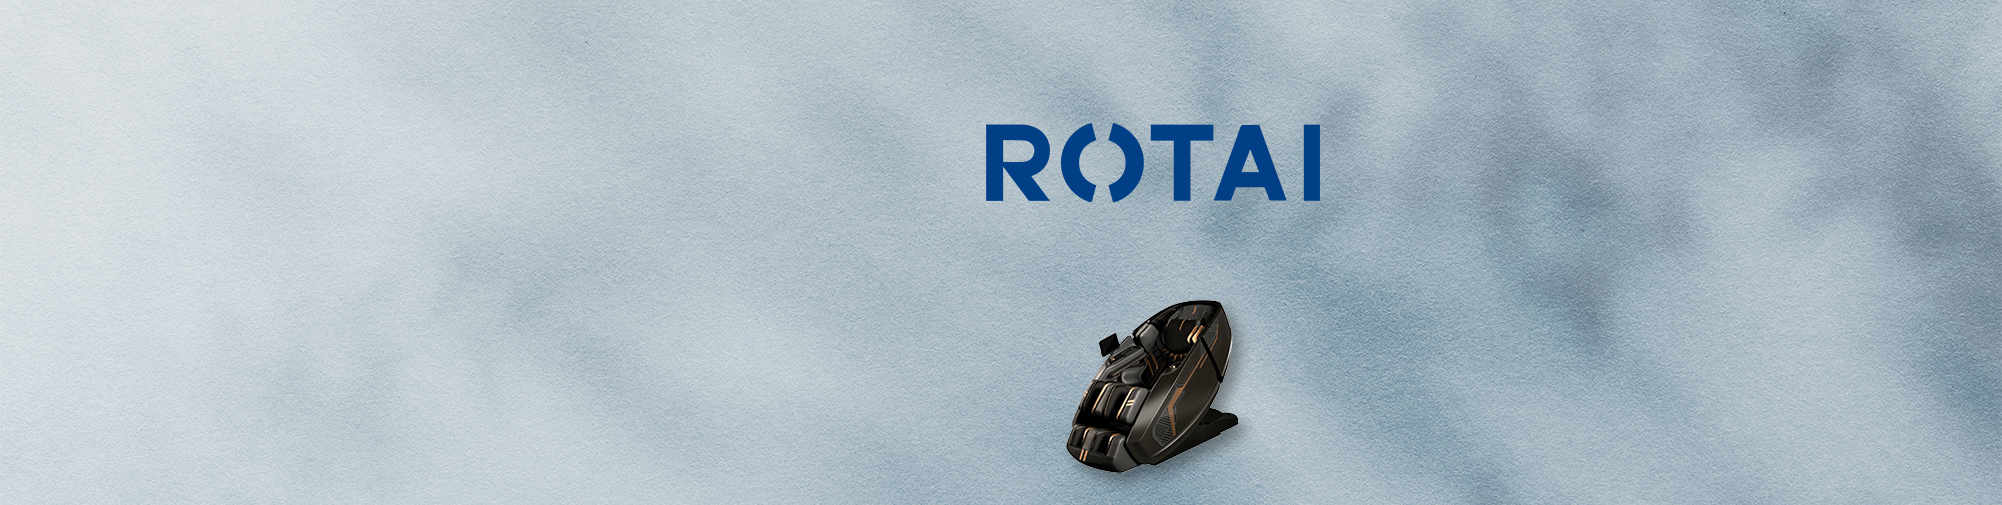 ROTAI | Massage Chair World